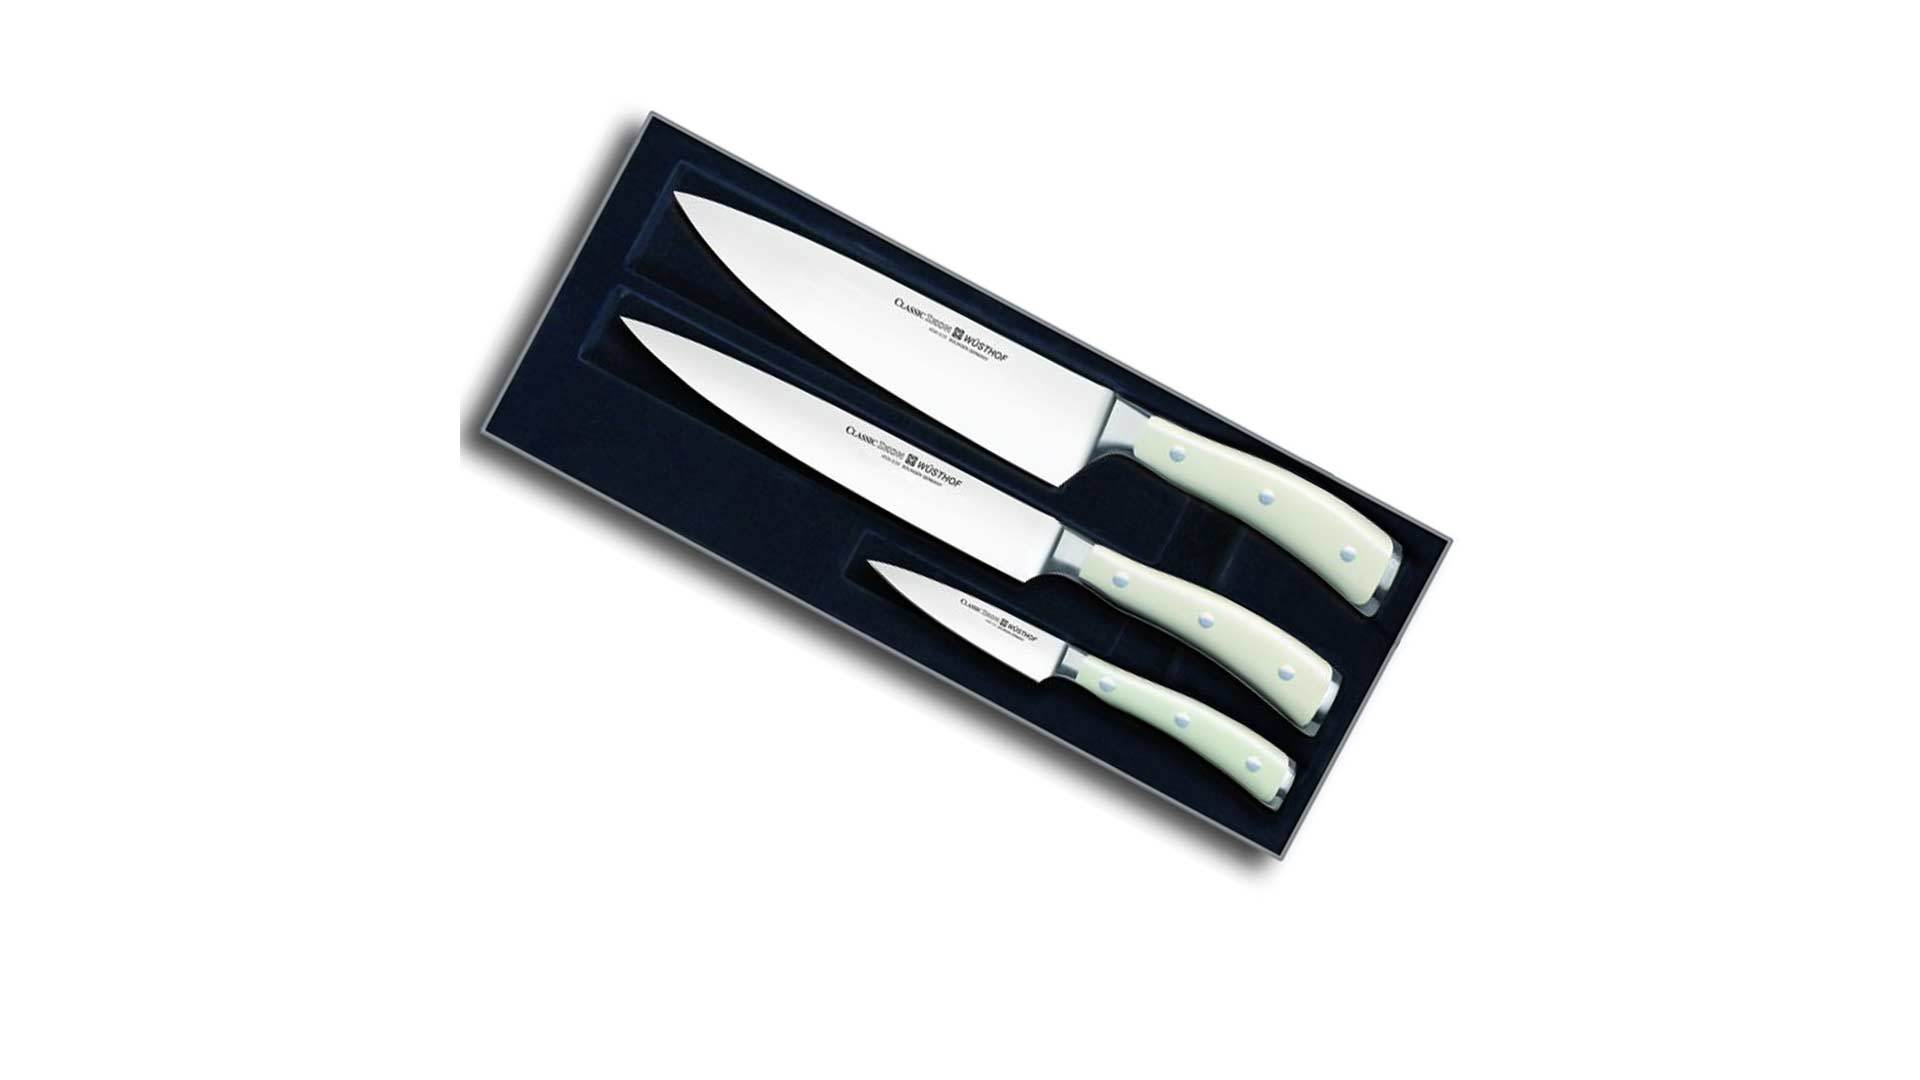 Набор из 3 кухонных ножей WUESTHOF Ikon Cream White, 9/20/20см, кованая сталь